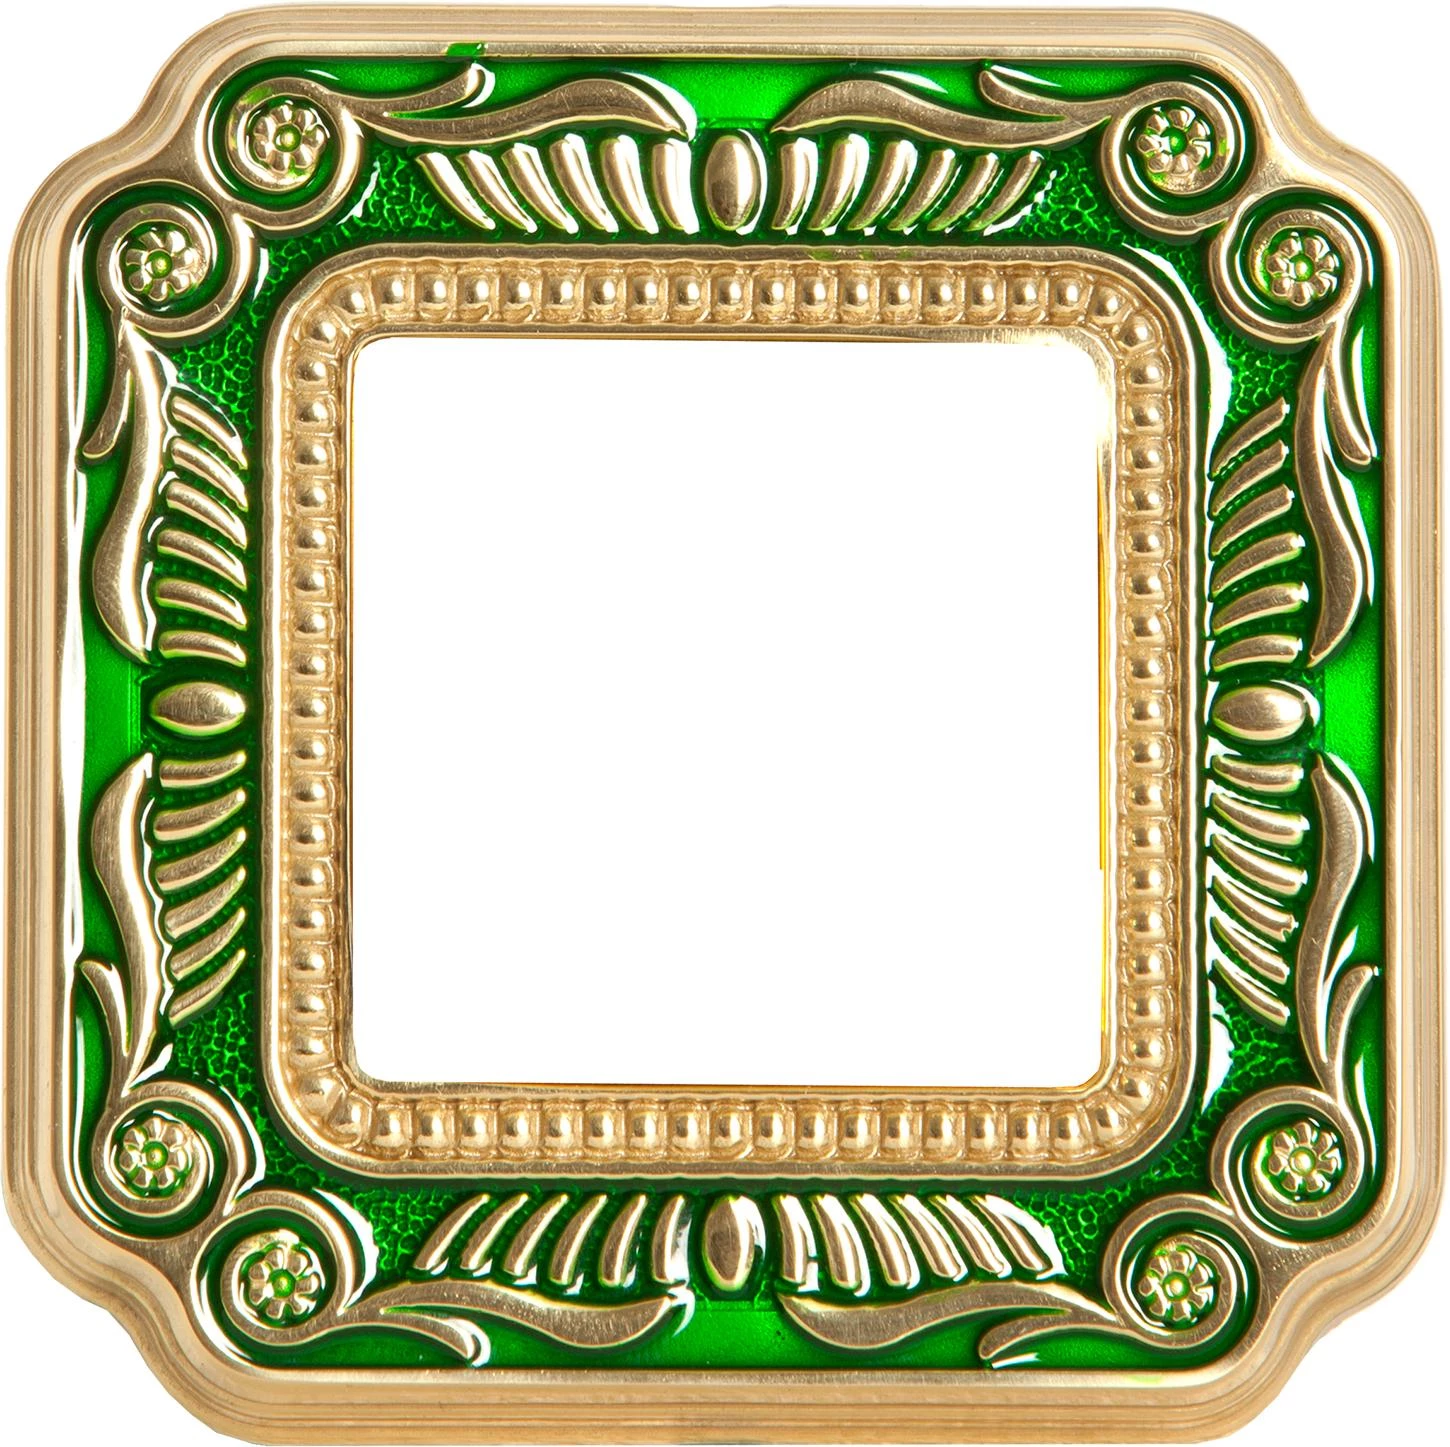  артикул FD01361VEEN название Рамка 1-ая (одинарная), цвет Изумрудно-зеленый, Firenze, Fede